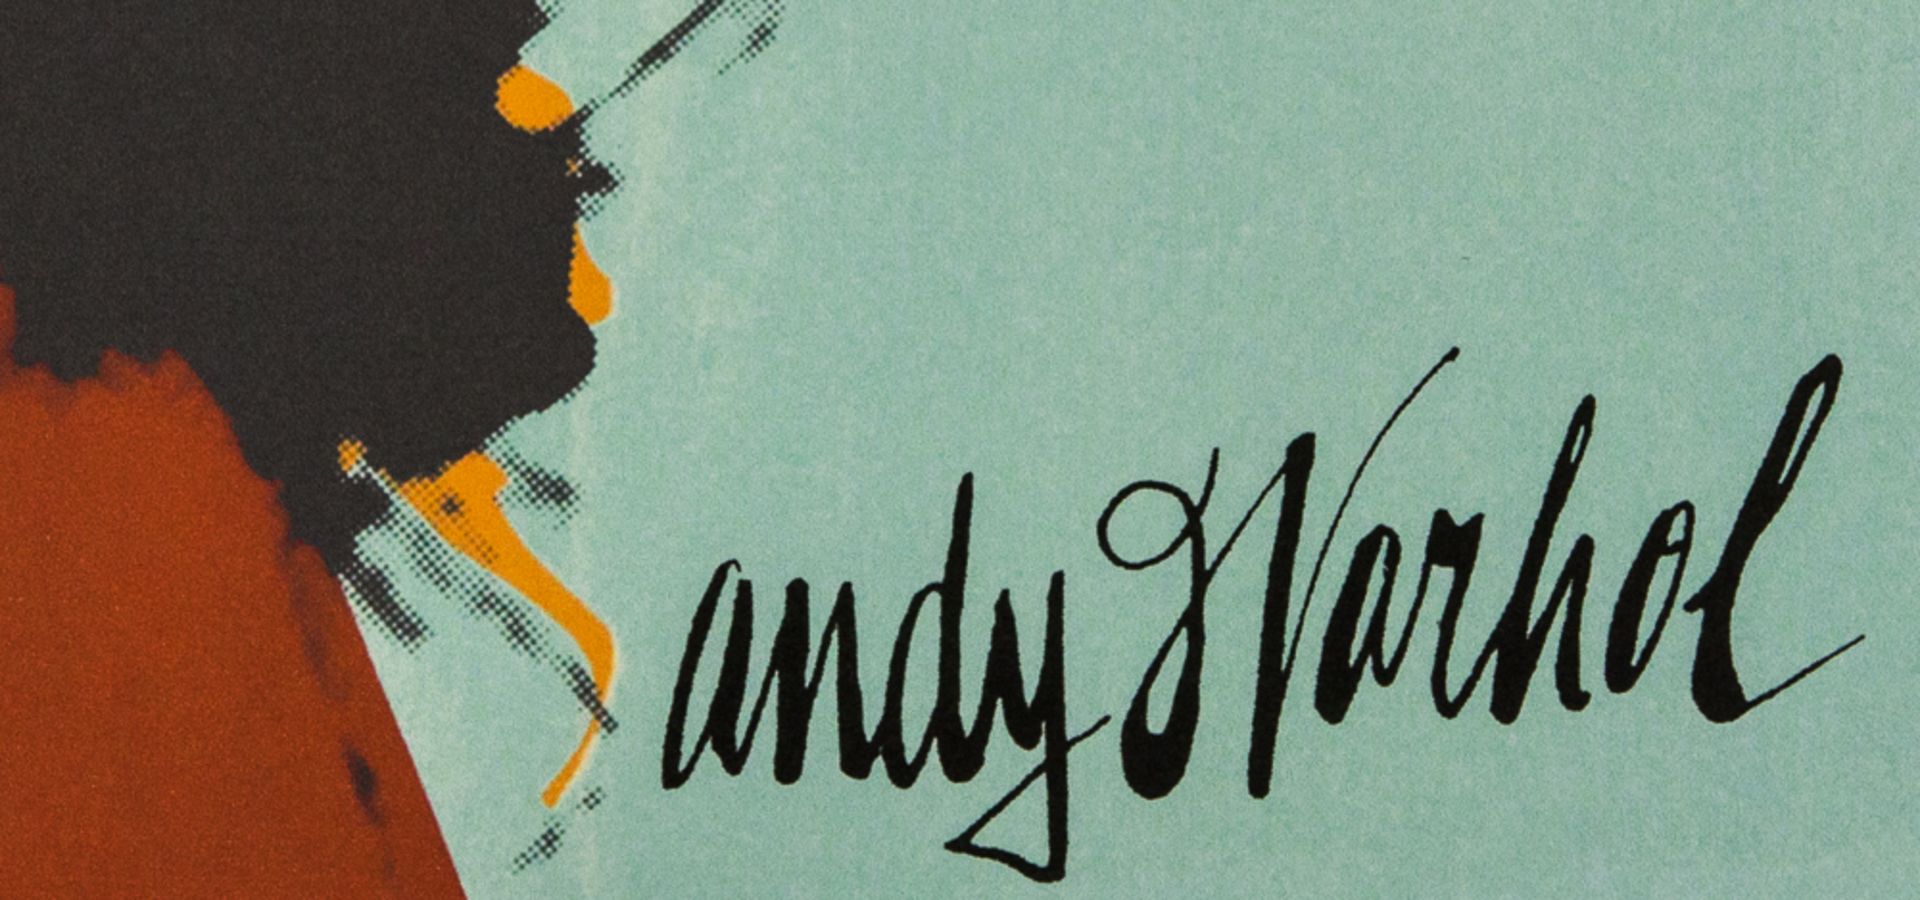 Andy Warhol 'Marilyn Monroe' - Image 2 of 4